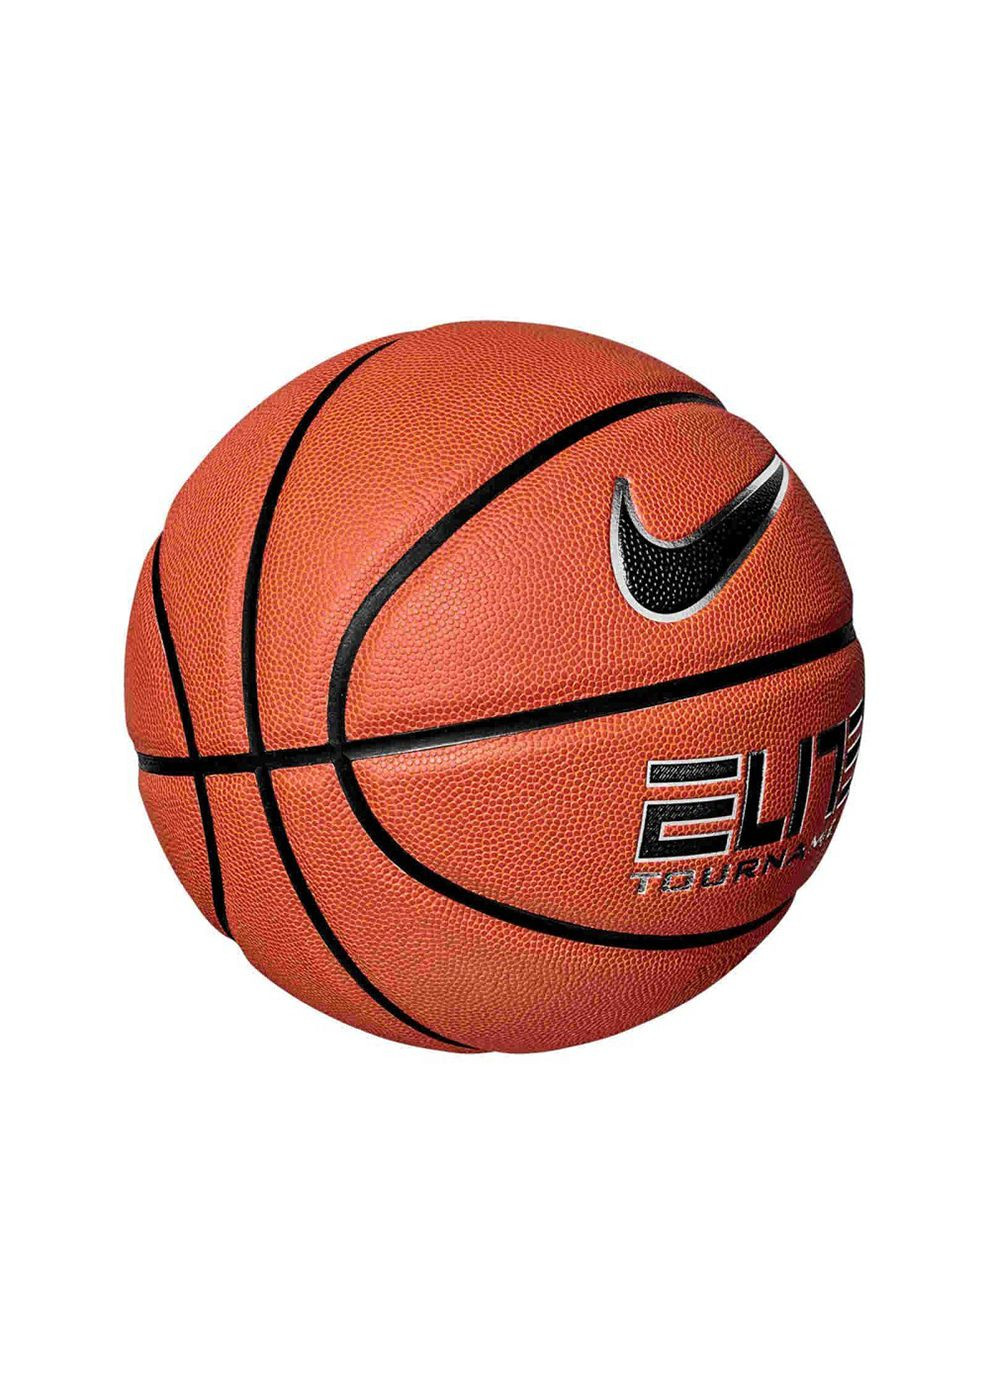 Баскетбольный Мяч ELITE TOURNAMENT 8P DEFLATED оранжевый Уни 7 Nike (268747100)